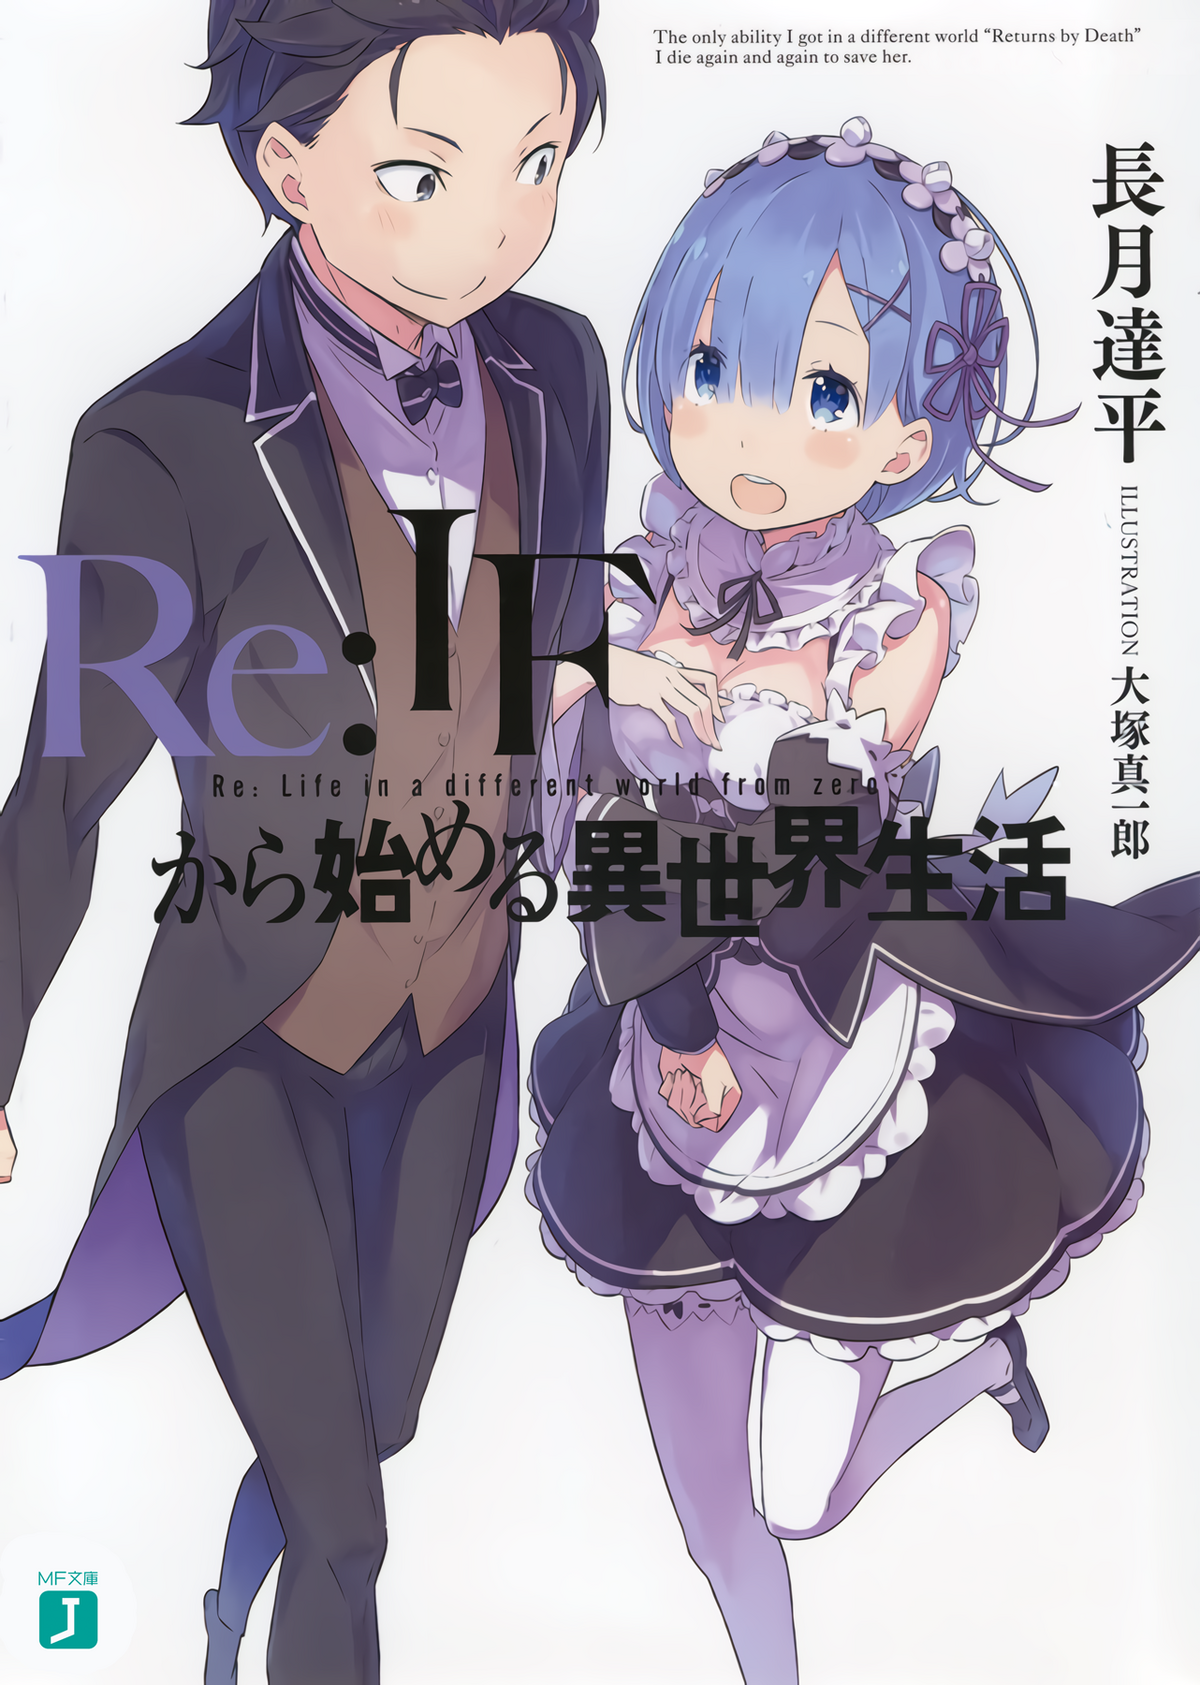 Rem x Subaru #rezero #RE:ZERO #anime #manga #japan